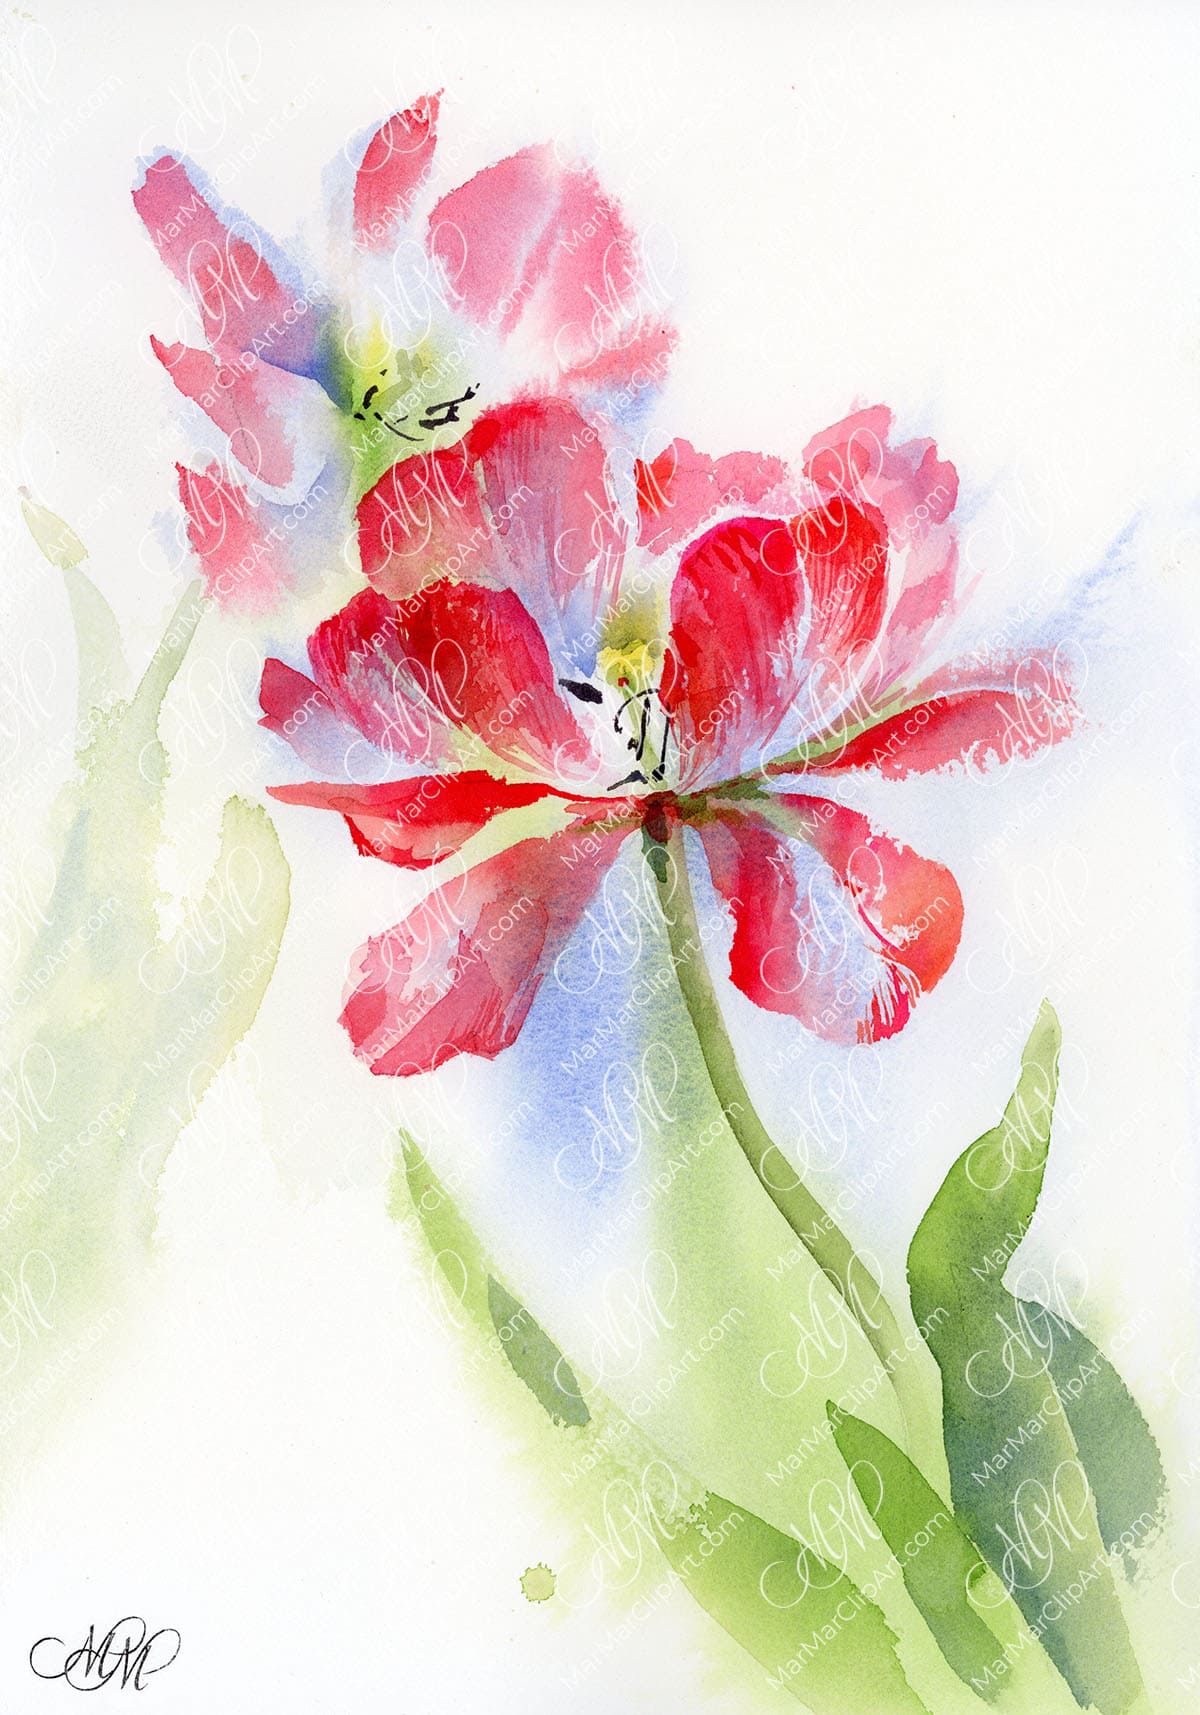 Watercolor. 2 tulips